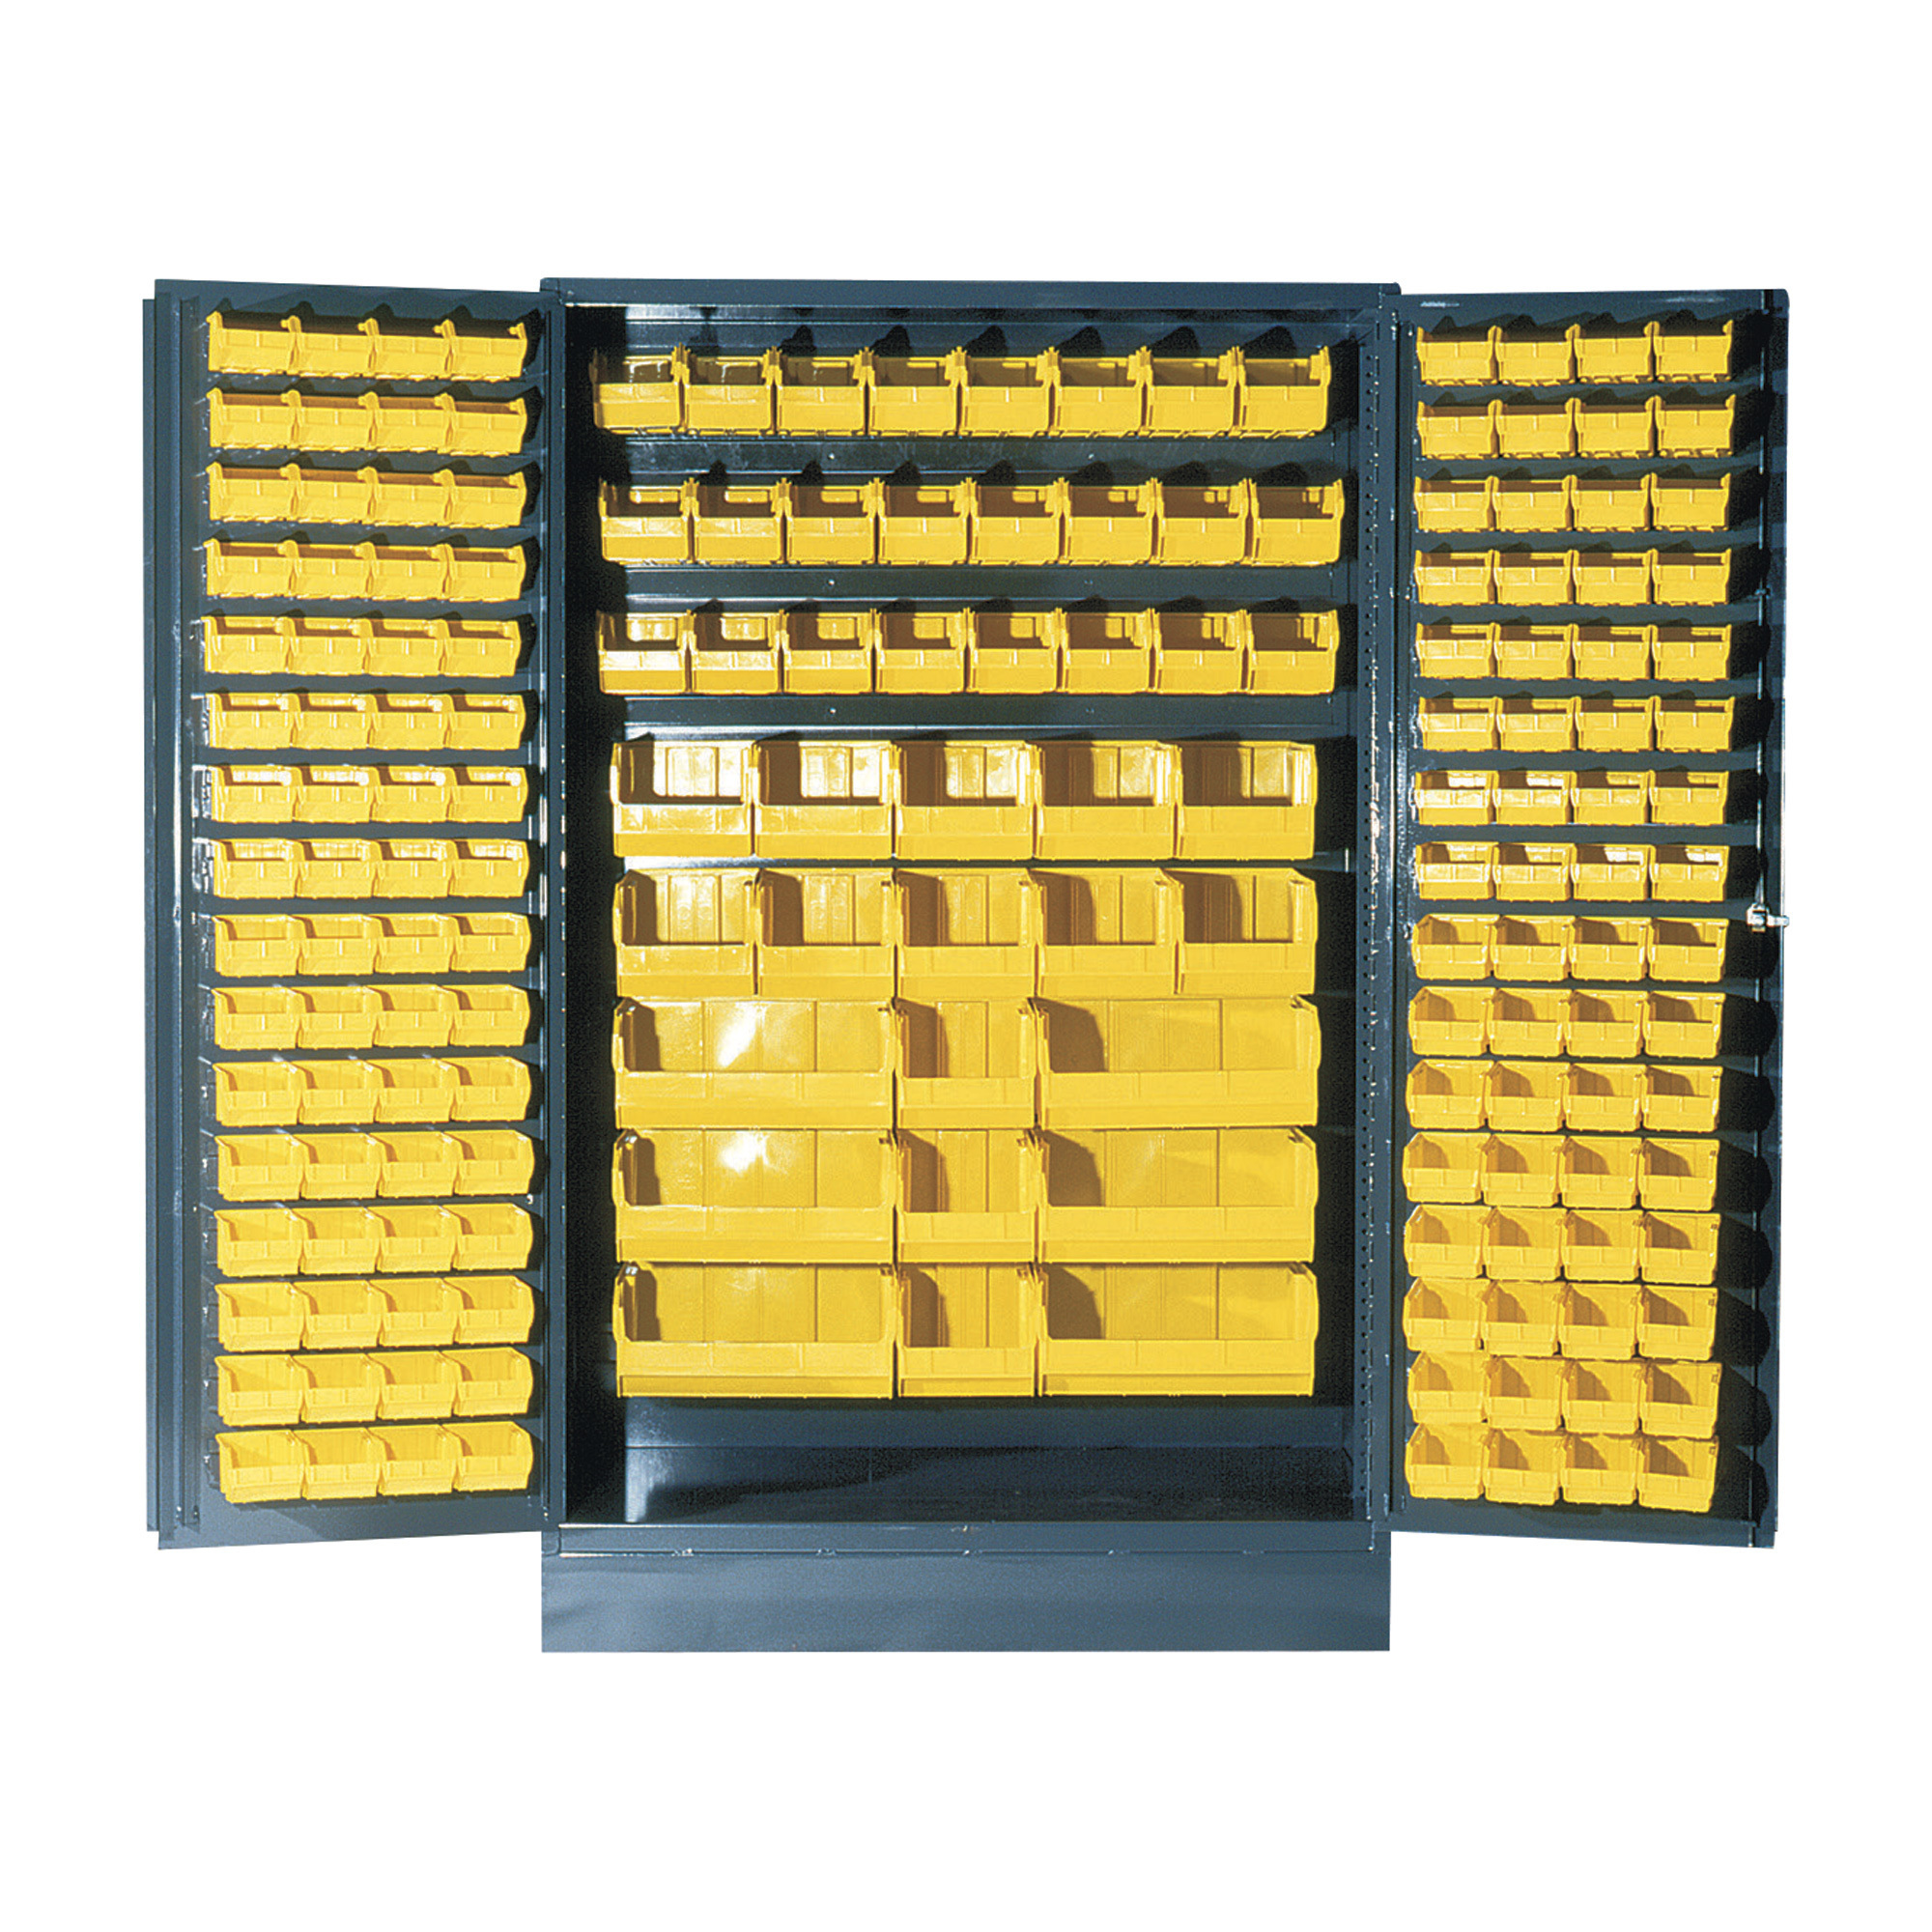 Quantum Storage Cabinet With 171 Bins, 48Inch x 24Inch x 78Inch Size, Yellow